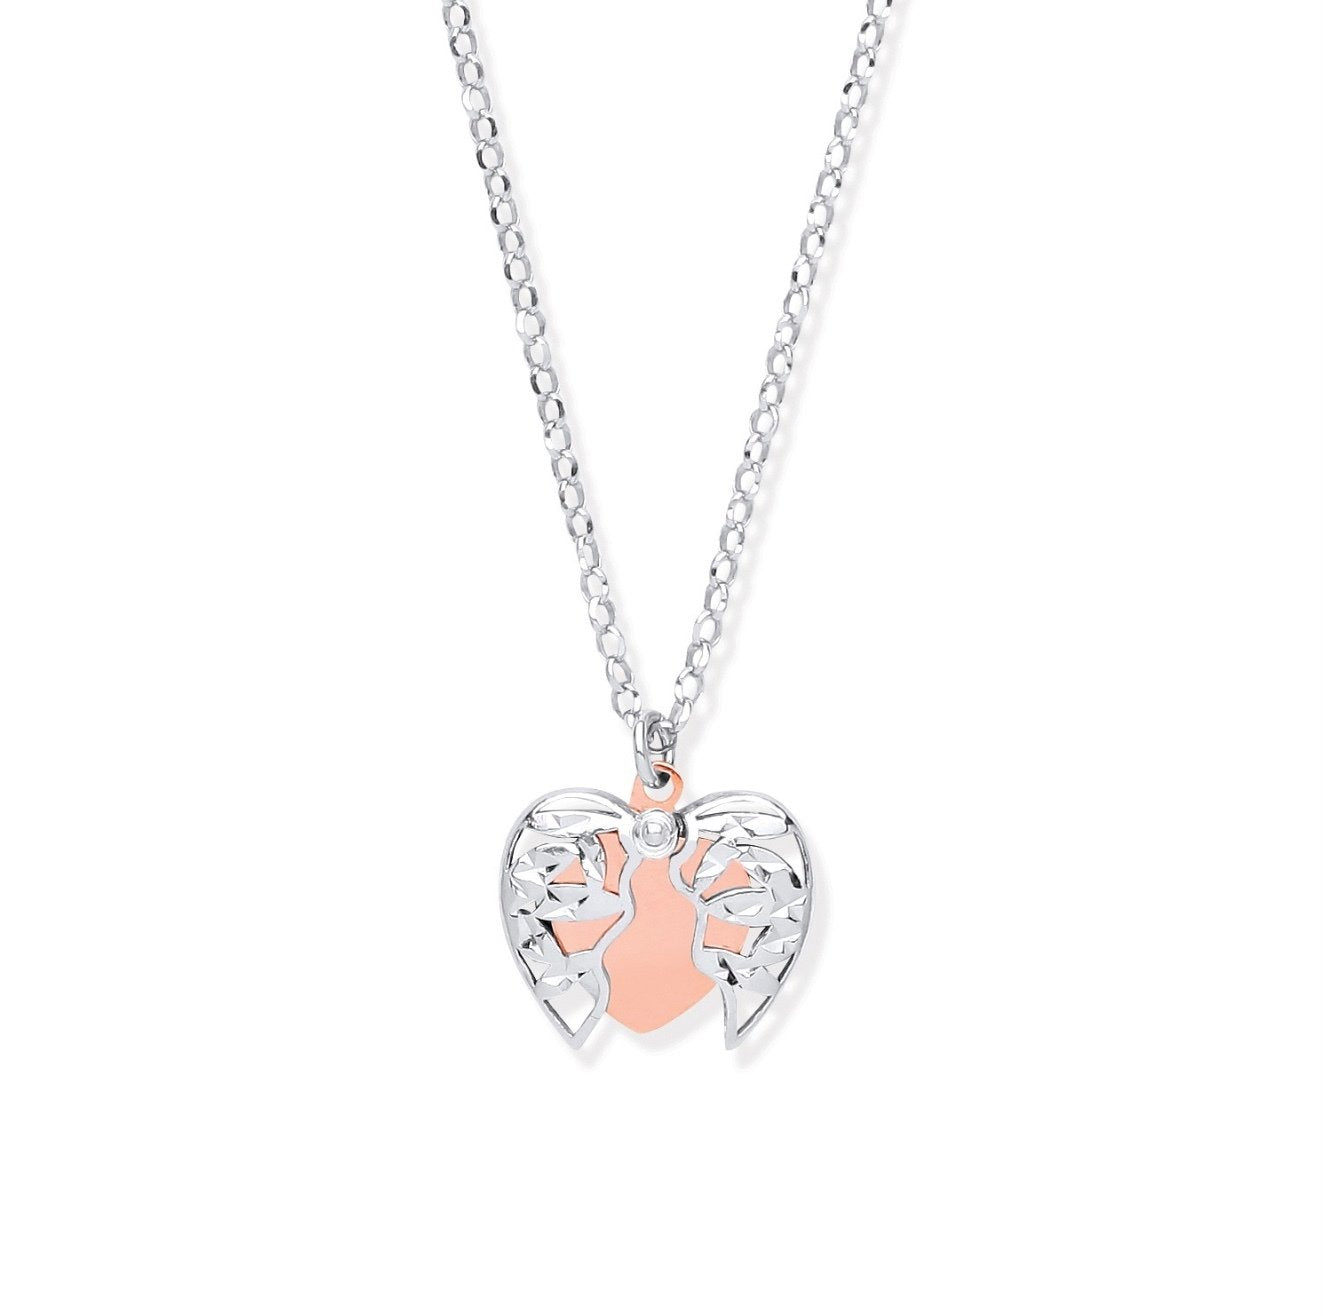 Silver/Rose Gold Heart Pendant